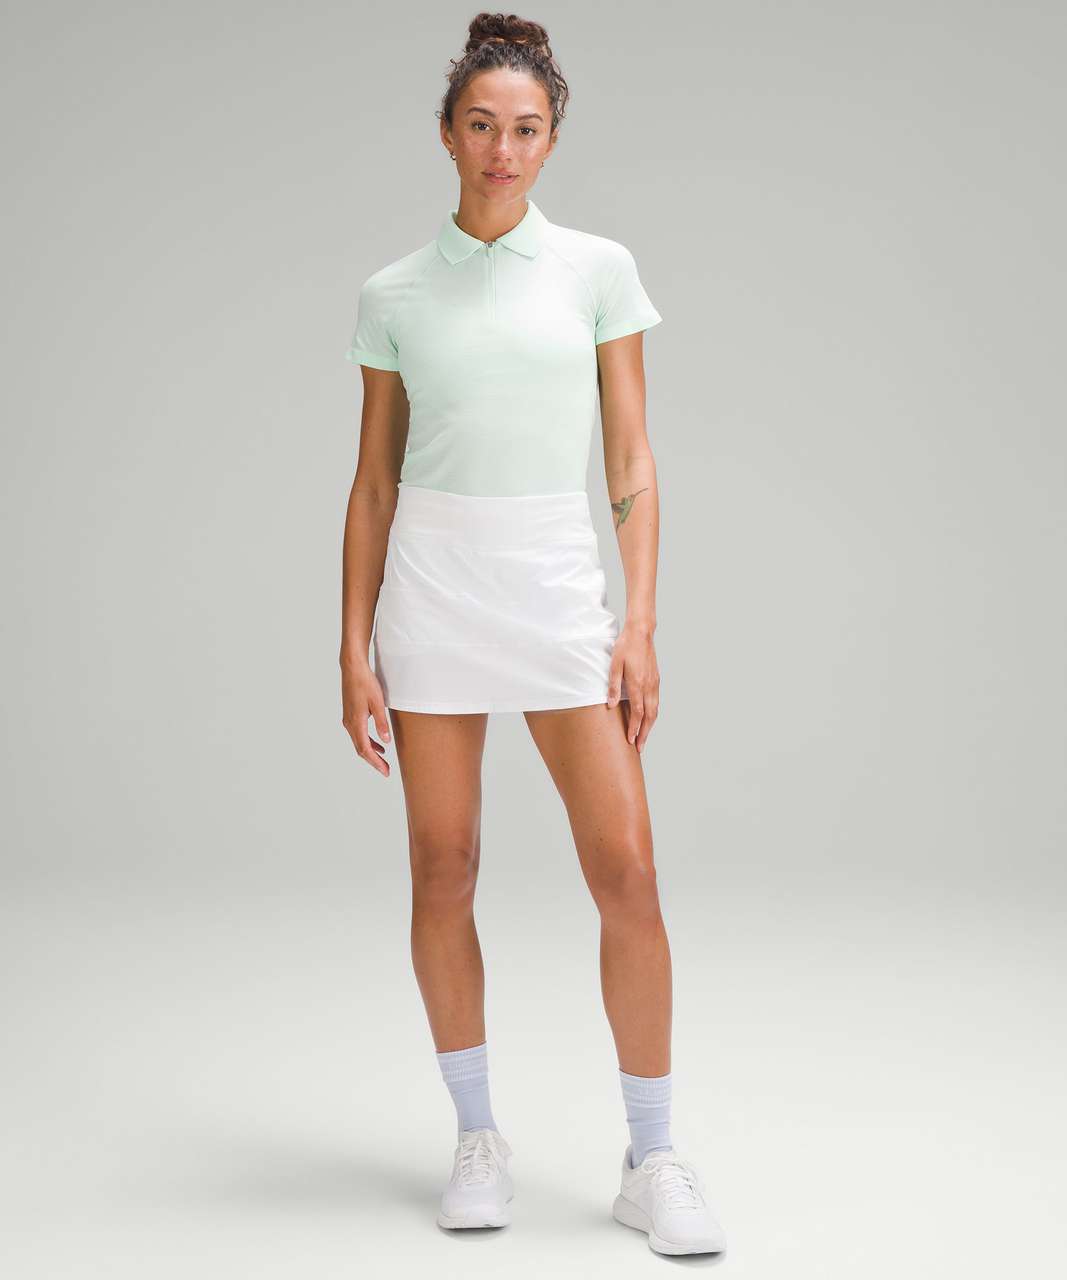 Lululemon Swiftly Tech Short-Sleeve Half-Zip Polo Shirt - Mint Moment / White